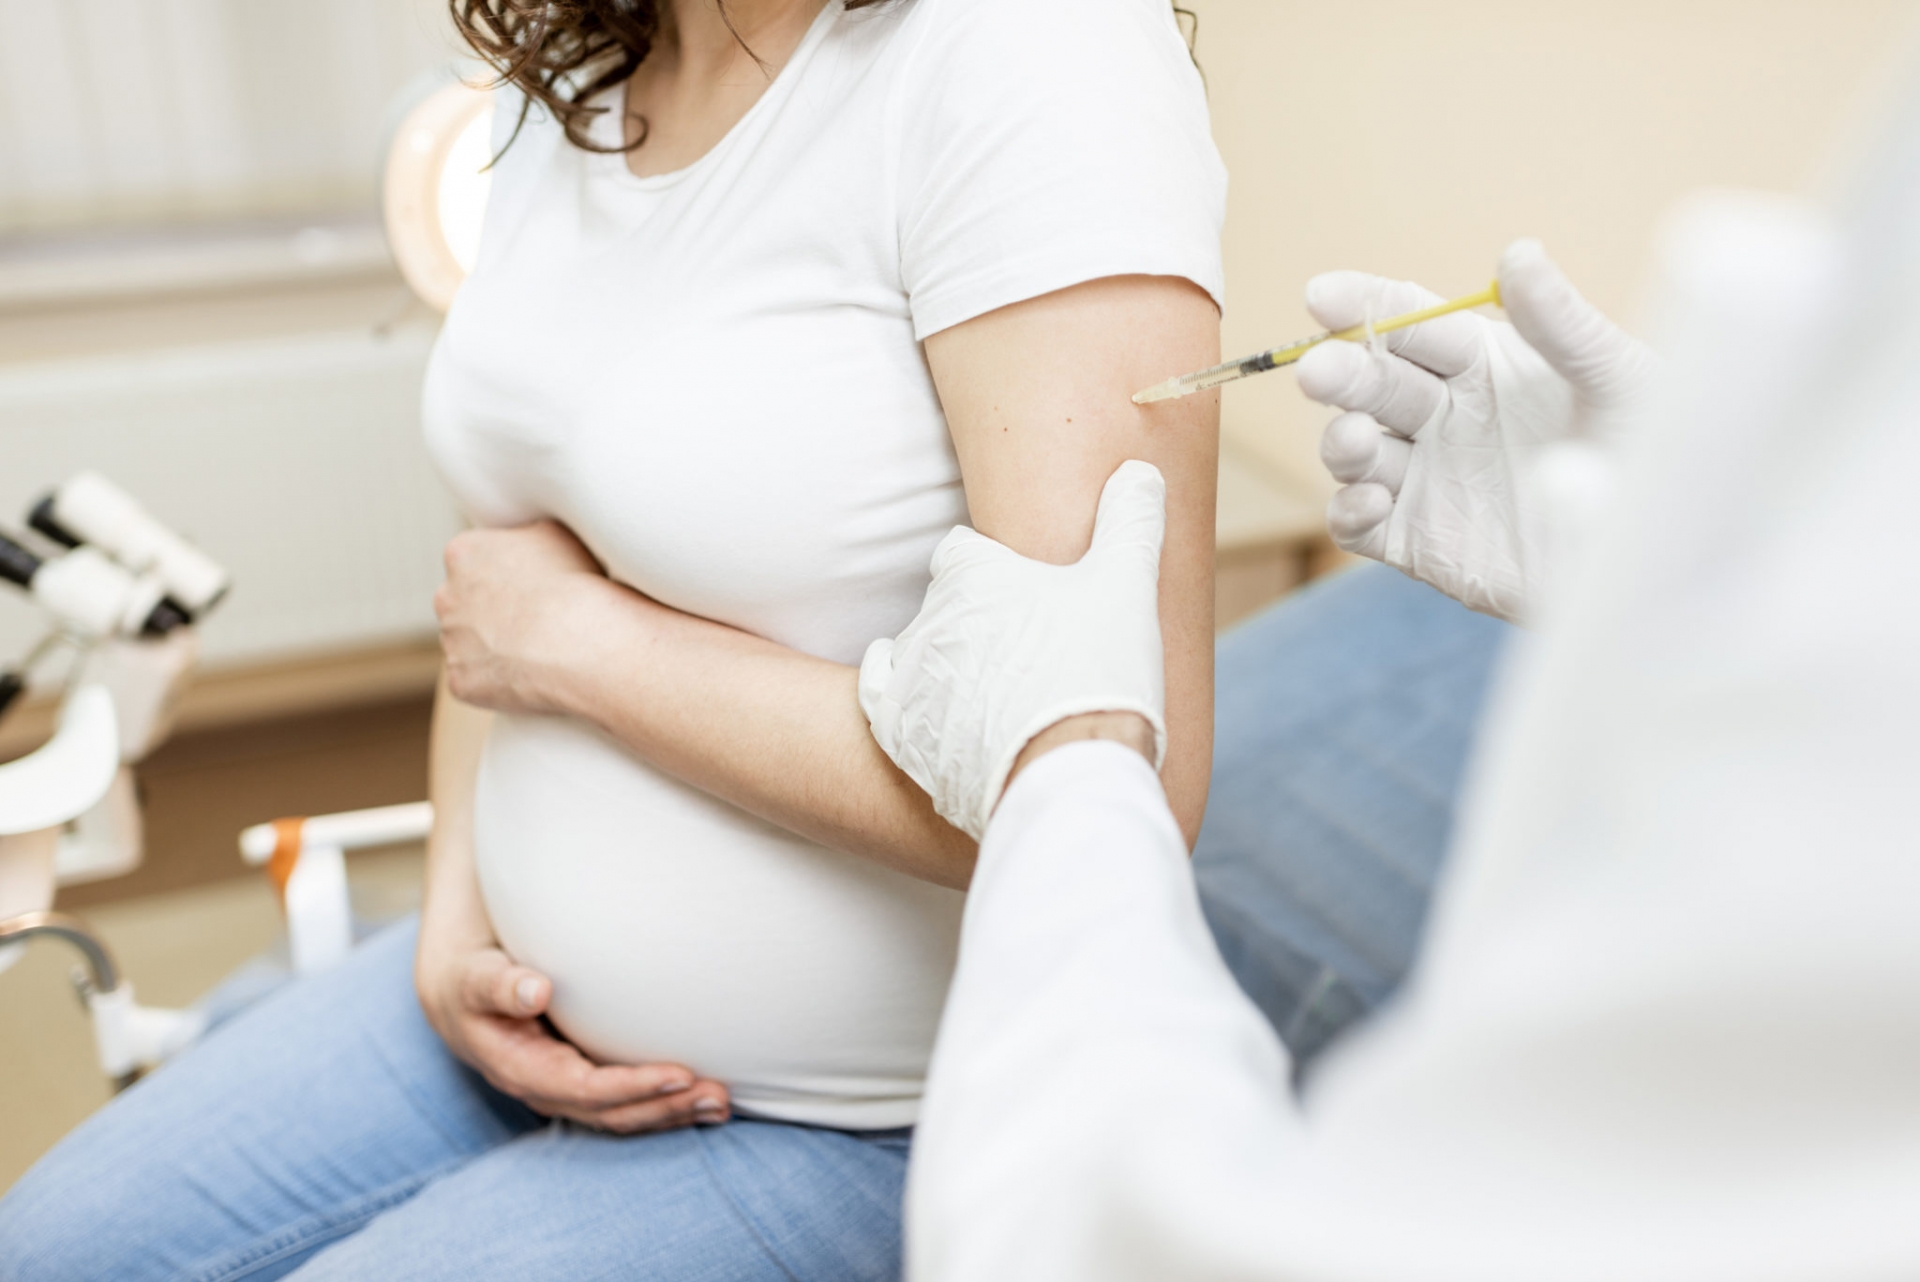 Should pregnant women get the COVID-19 vaccine?